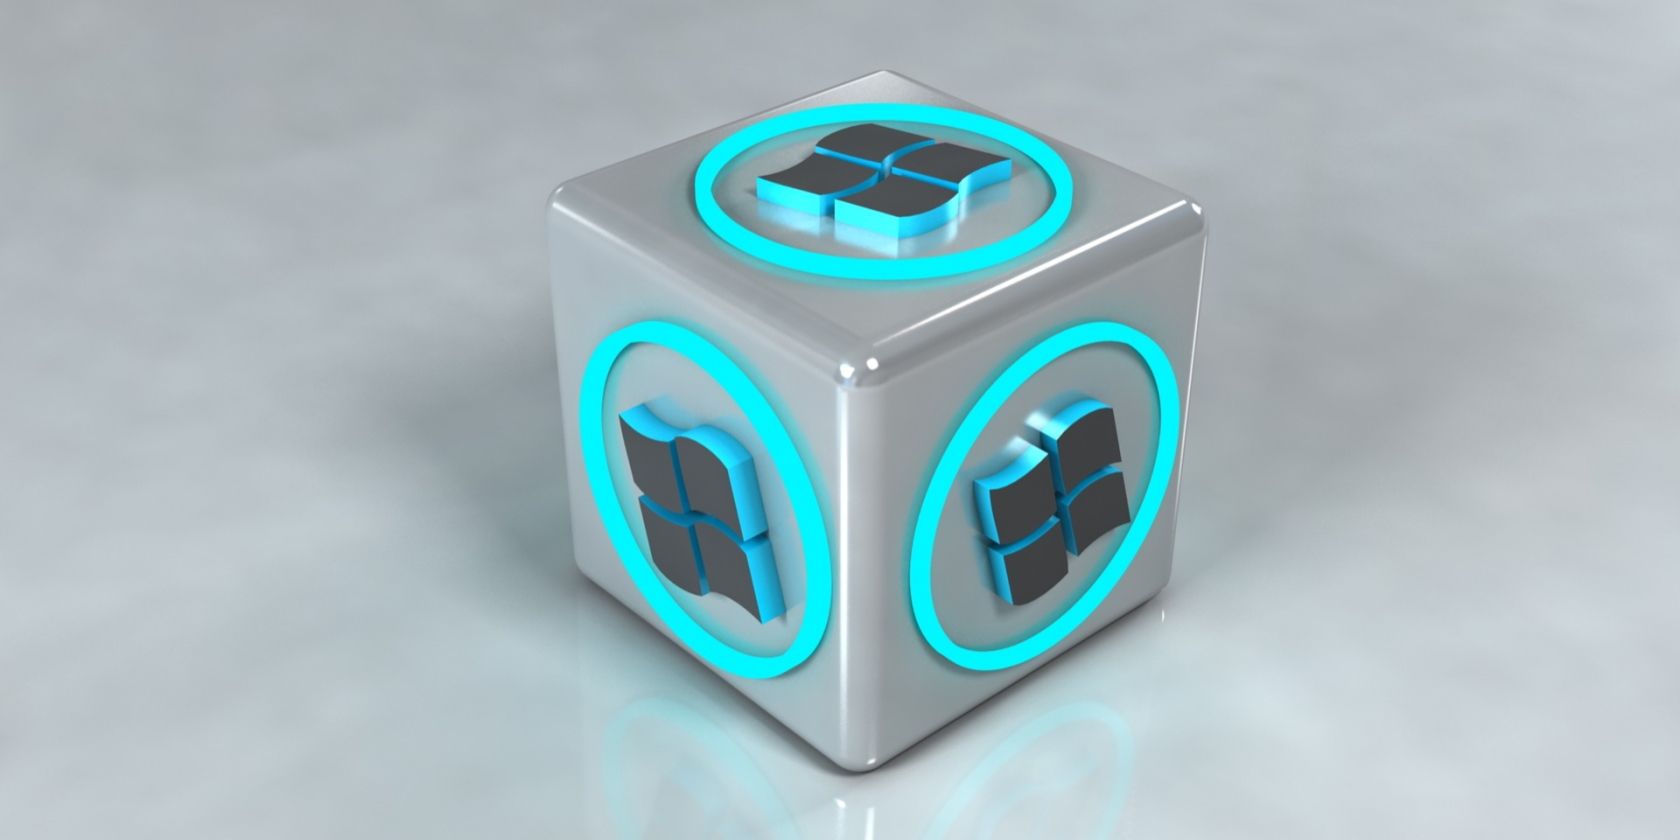 windows logo on a cube